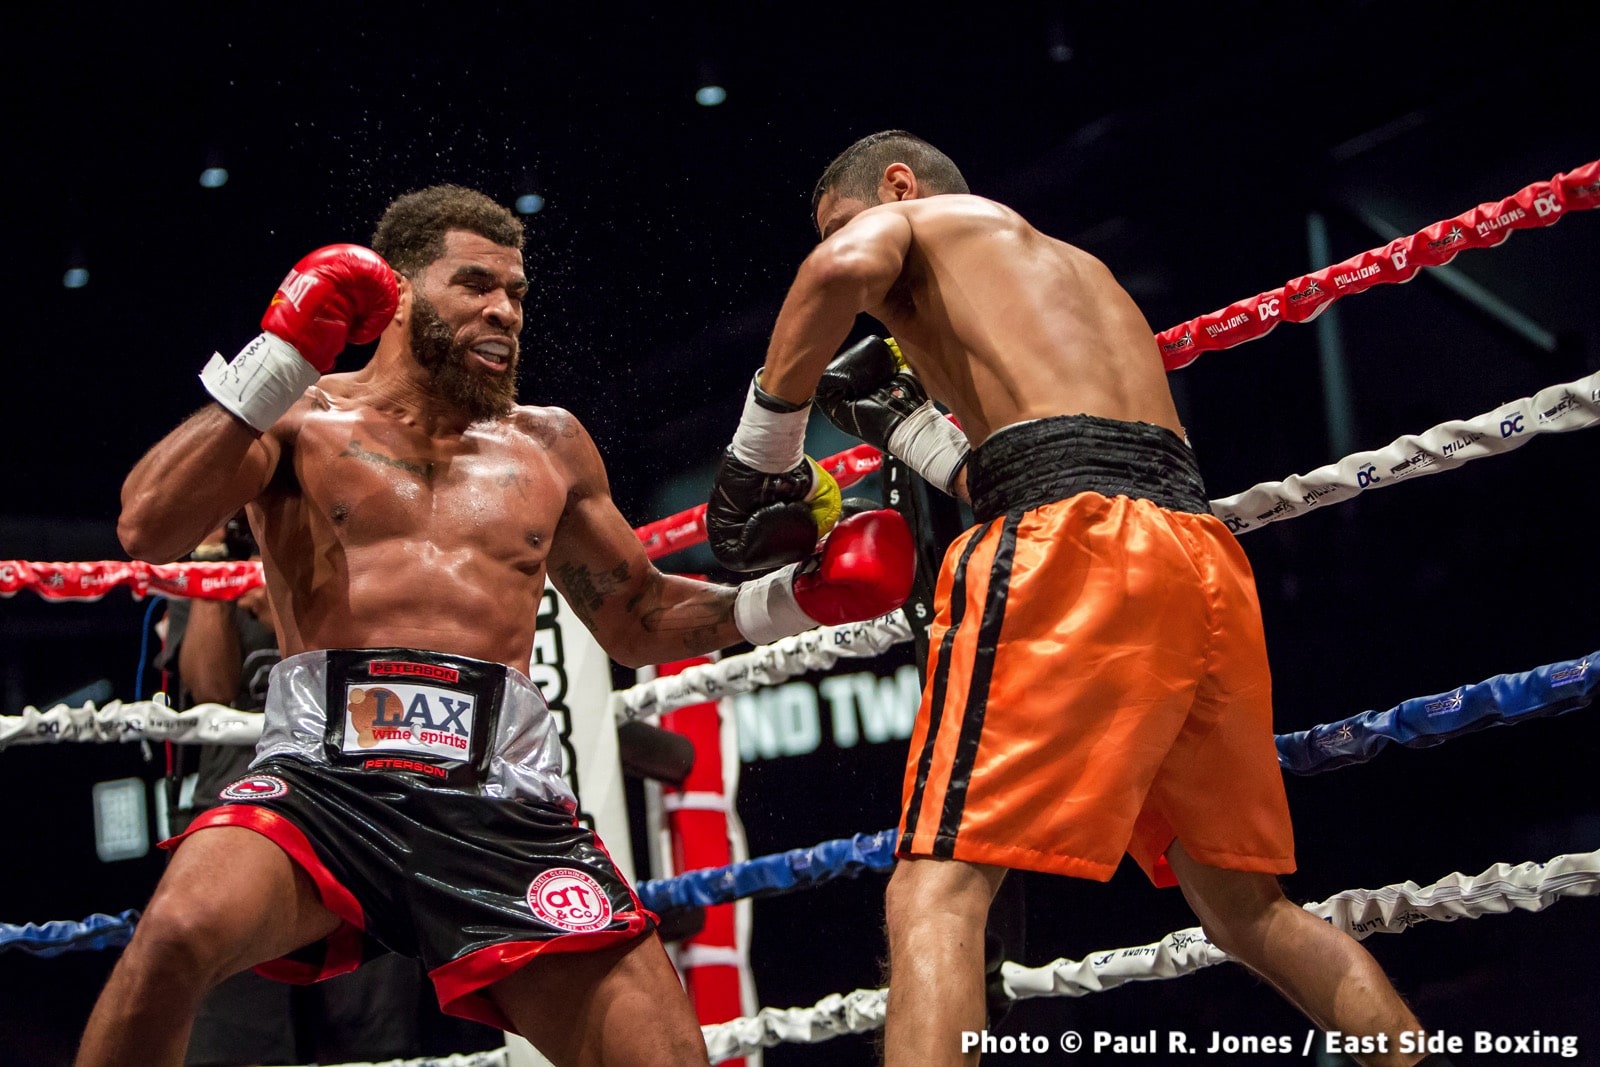 Saul Corral boxing image / photo